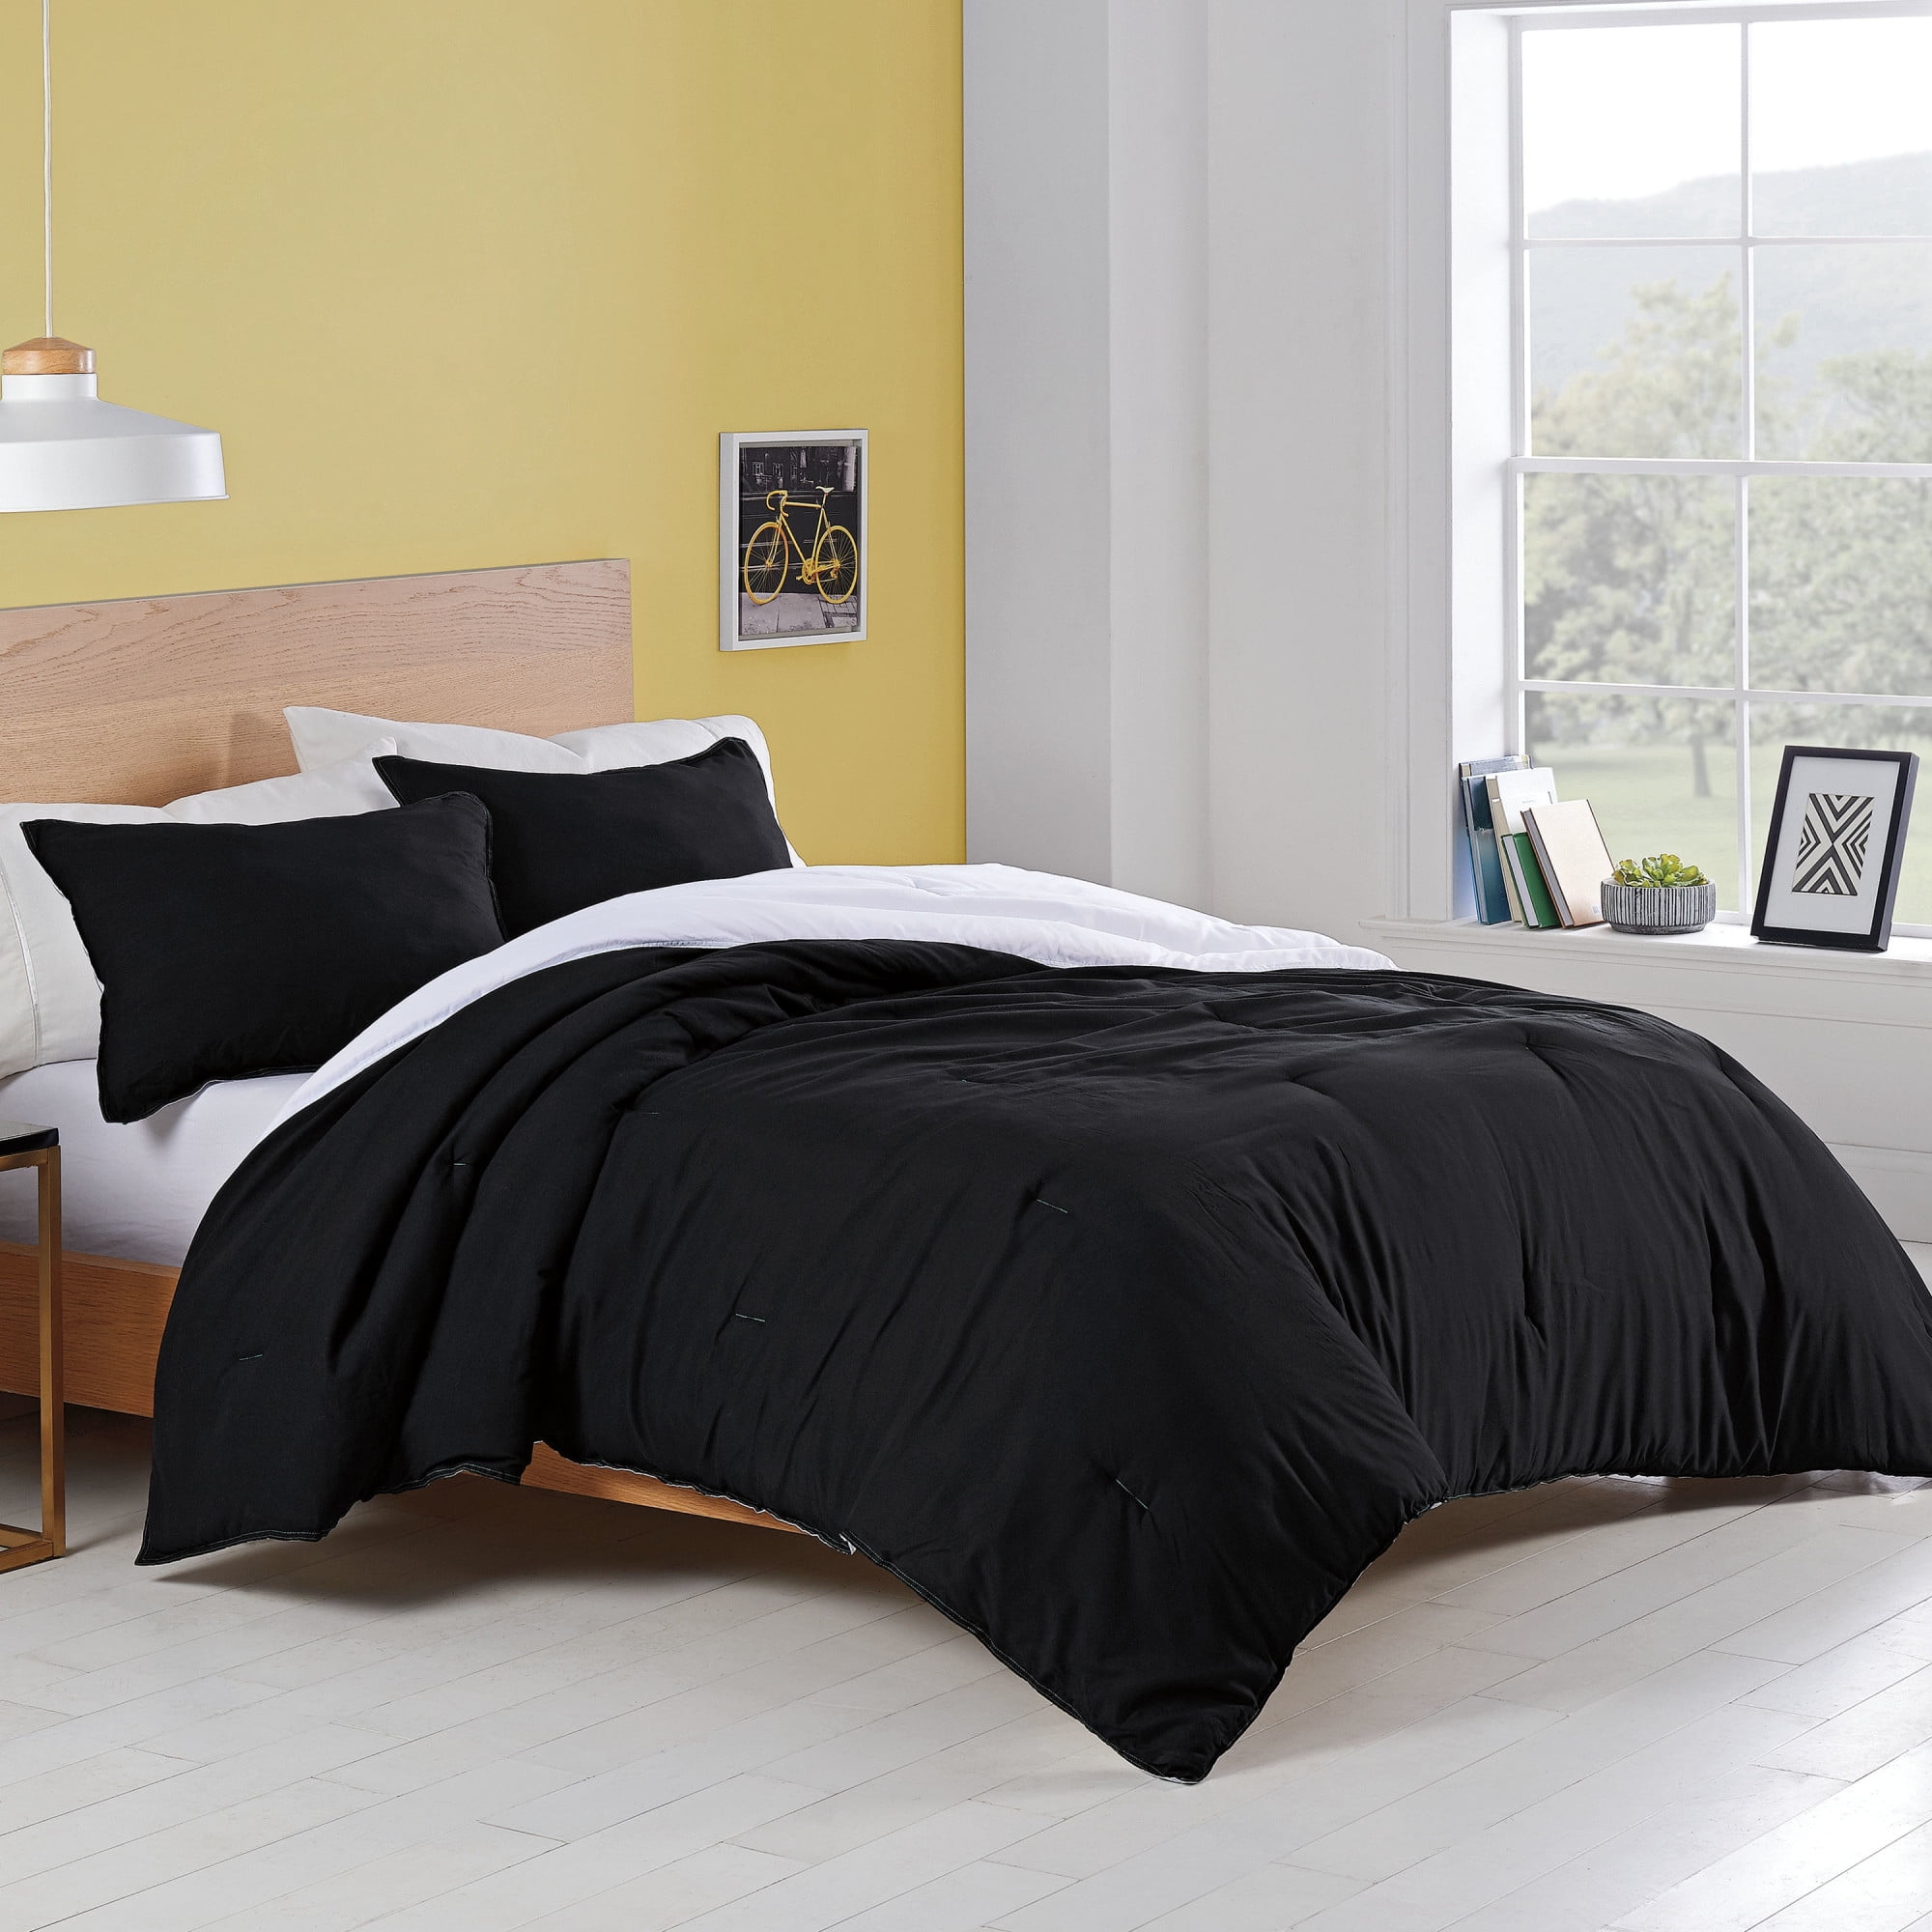 PCHF China Art Black 3-piece Comforter Set - On Sale - Bed Bath & Beyond -  23018236